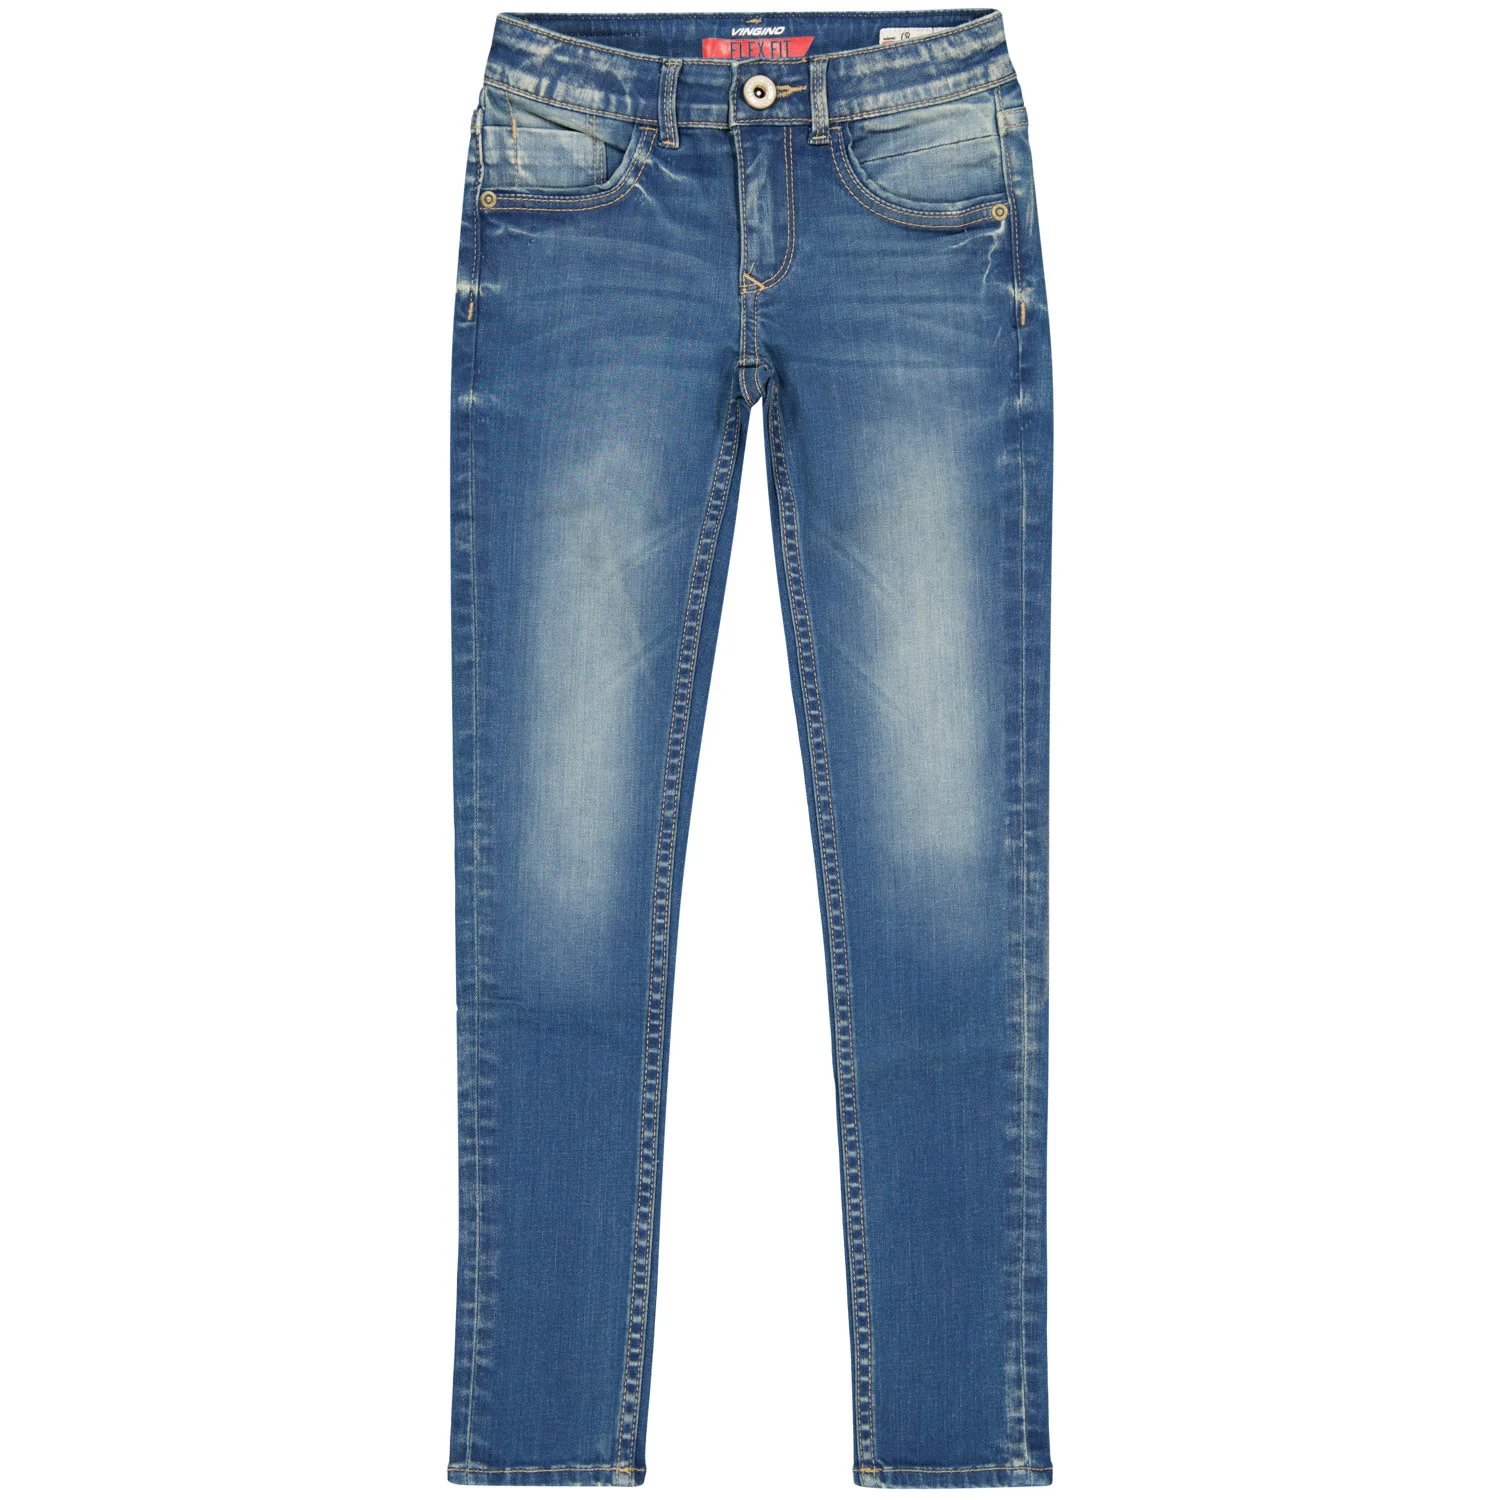 Afbeelding van Vingino Meiden jeans super skinny flex fit bernice mid blue wash